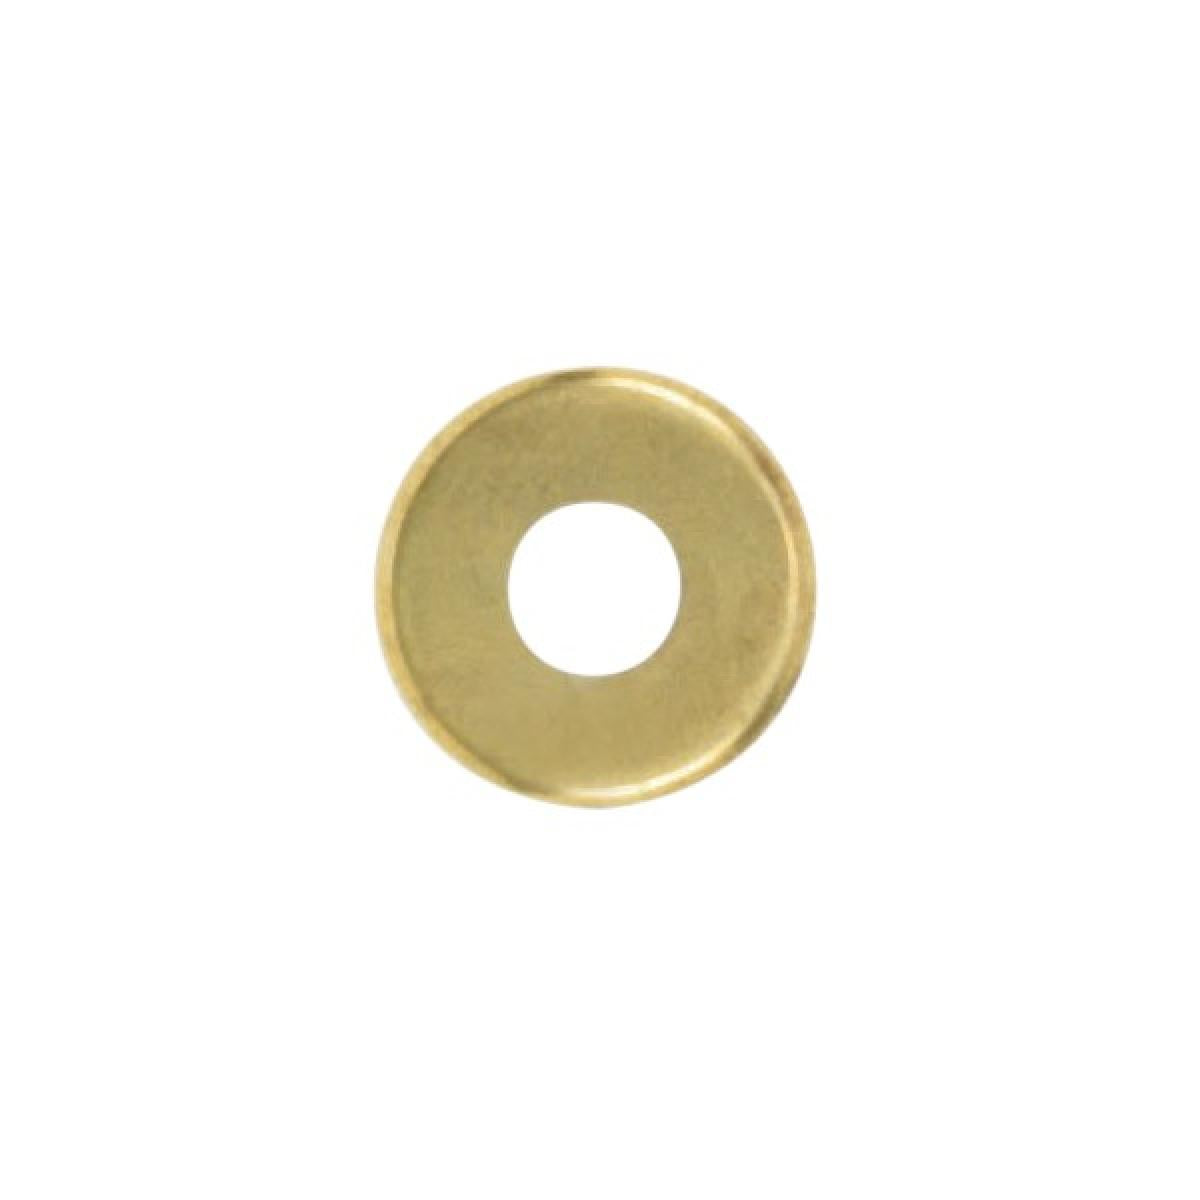 Satco 90-2049 Steel Check Ring Curled Edge 1/8 IP Slip Brass Plated Finish 1/2" Diameter